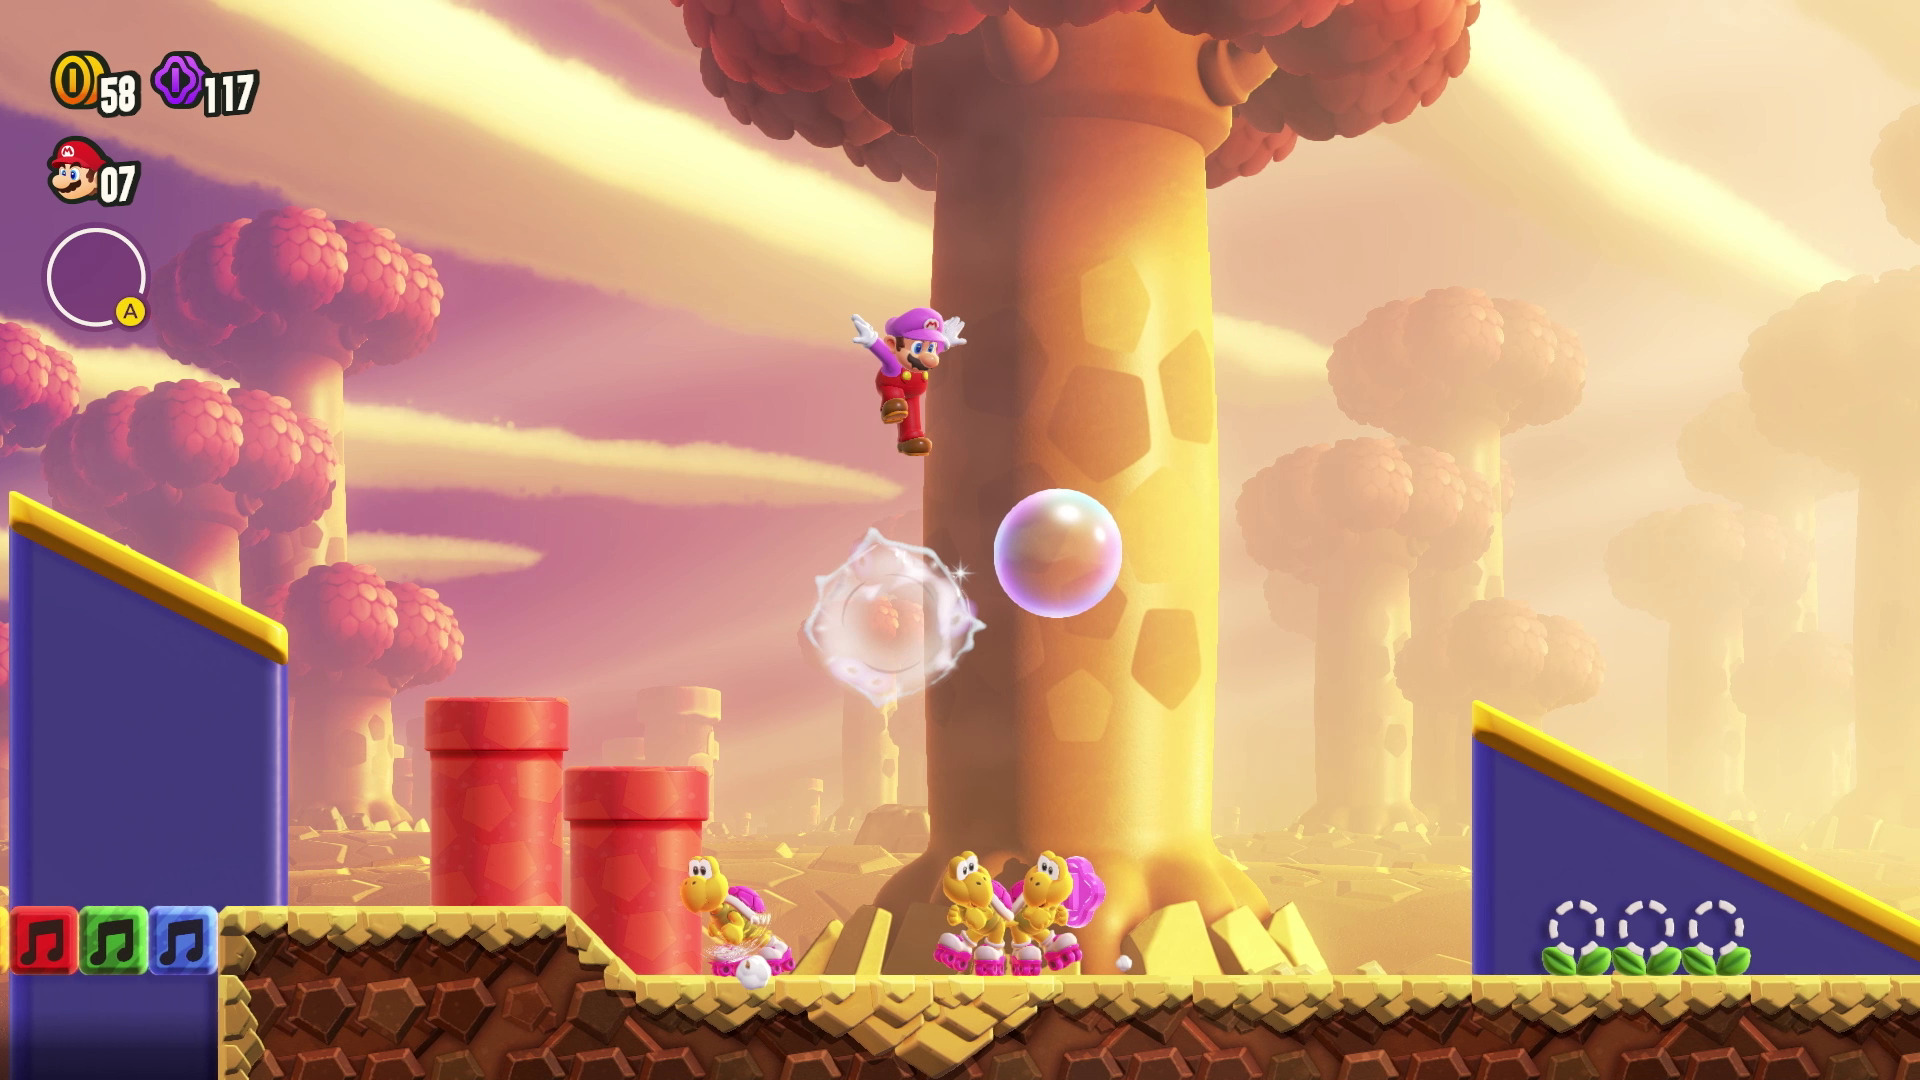 Super Mario Bros. Wonder screenshots - Image #32547